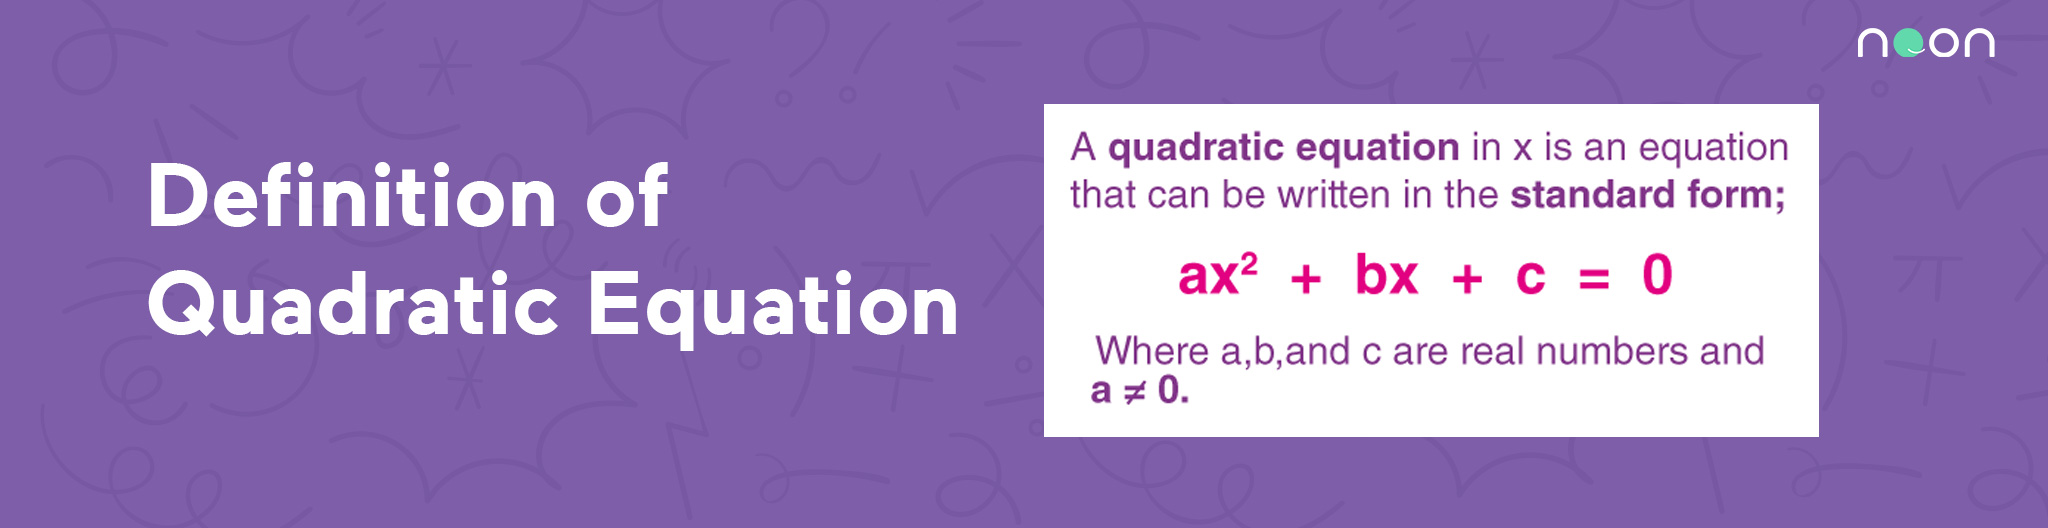 Definition of Quadratic Equation